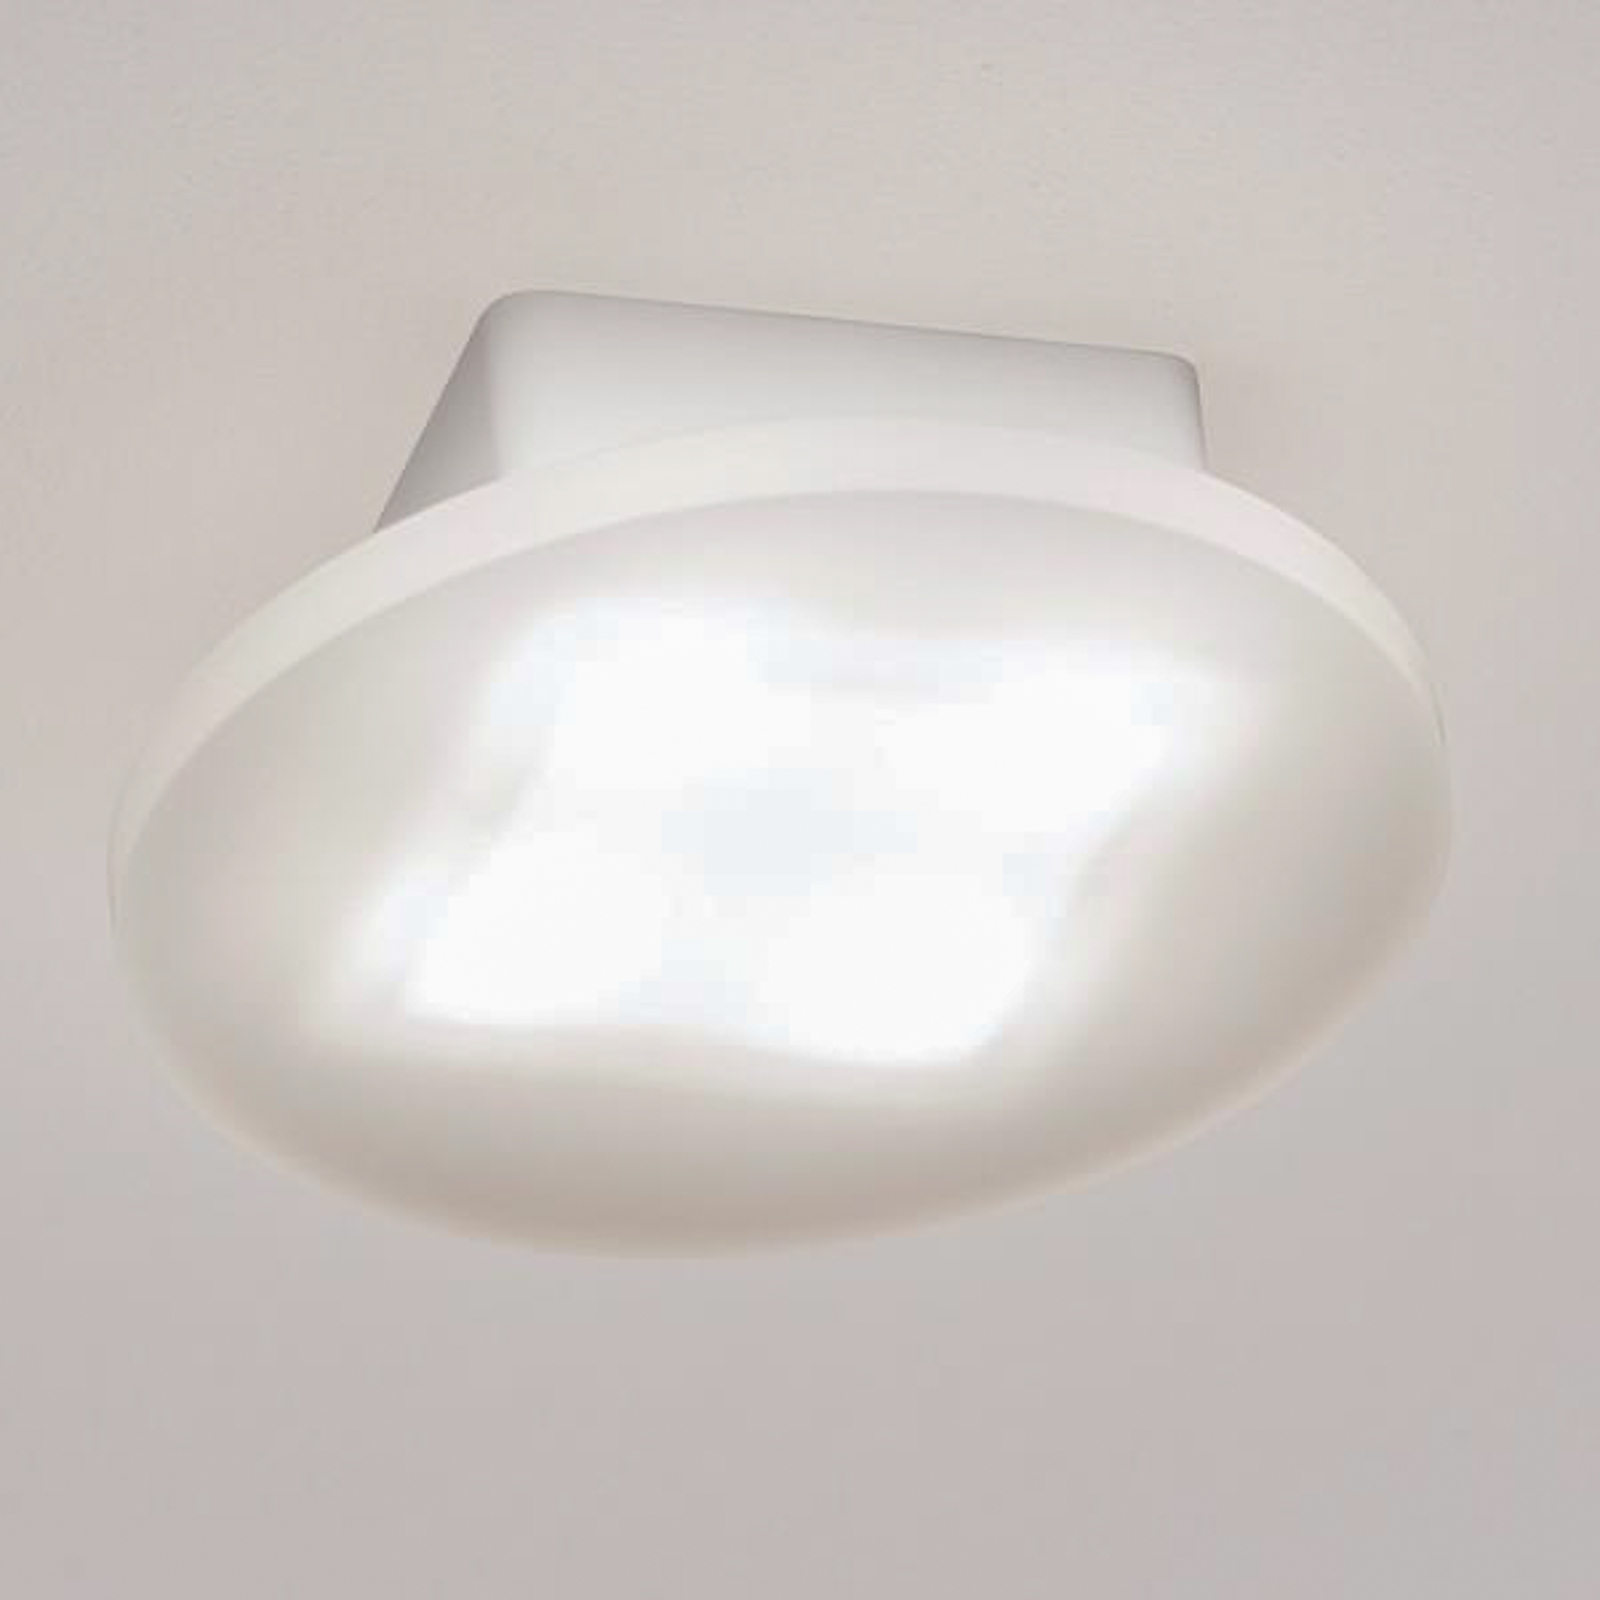 Lampa sufitowa LED Born 2B 16S okrągła 6W 930